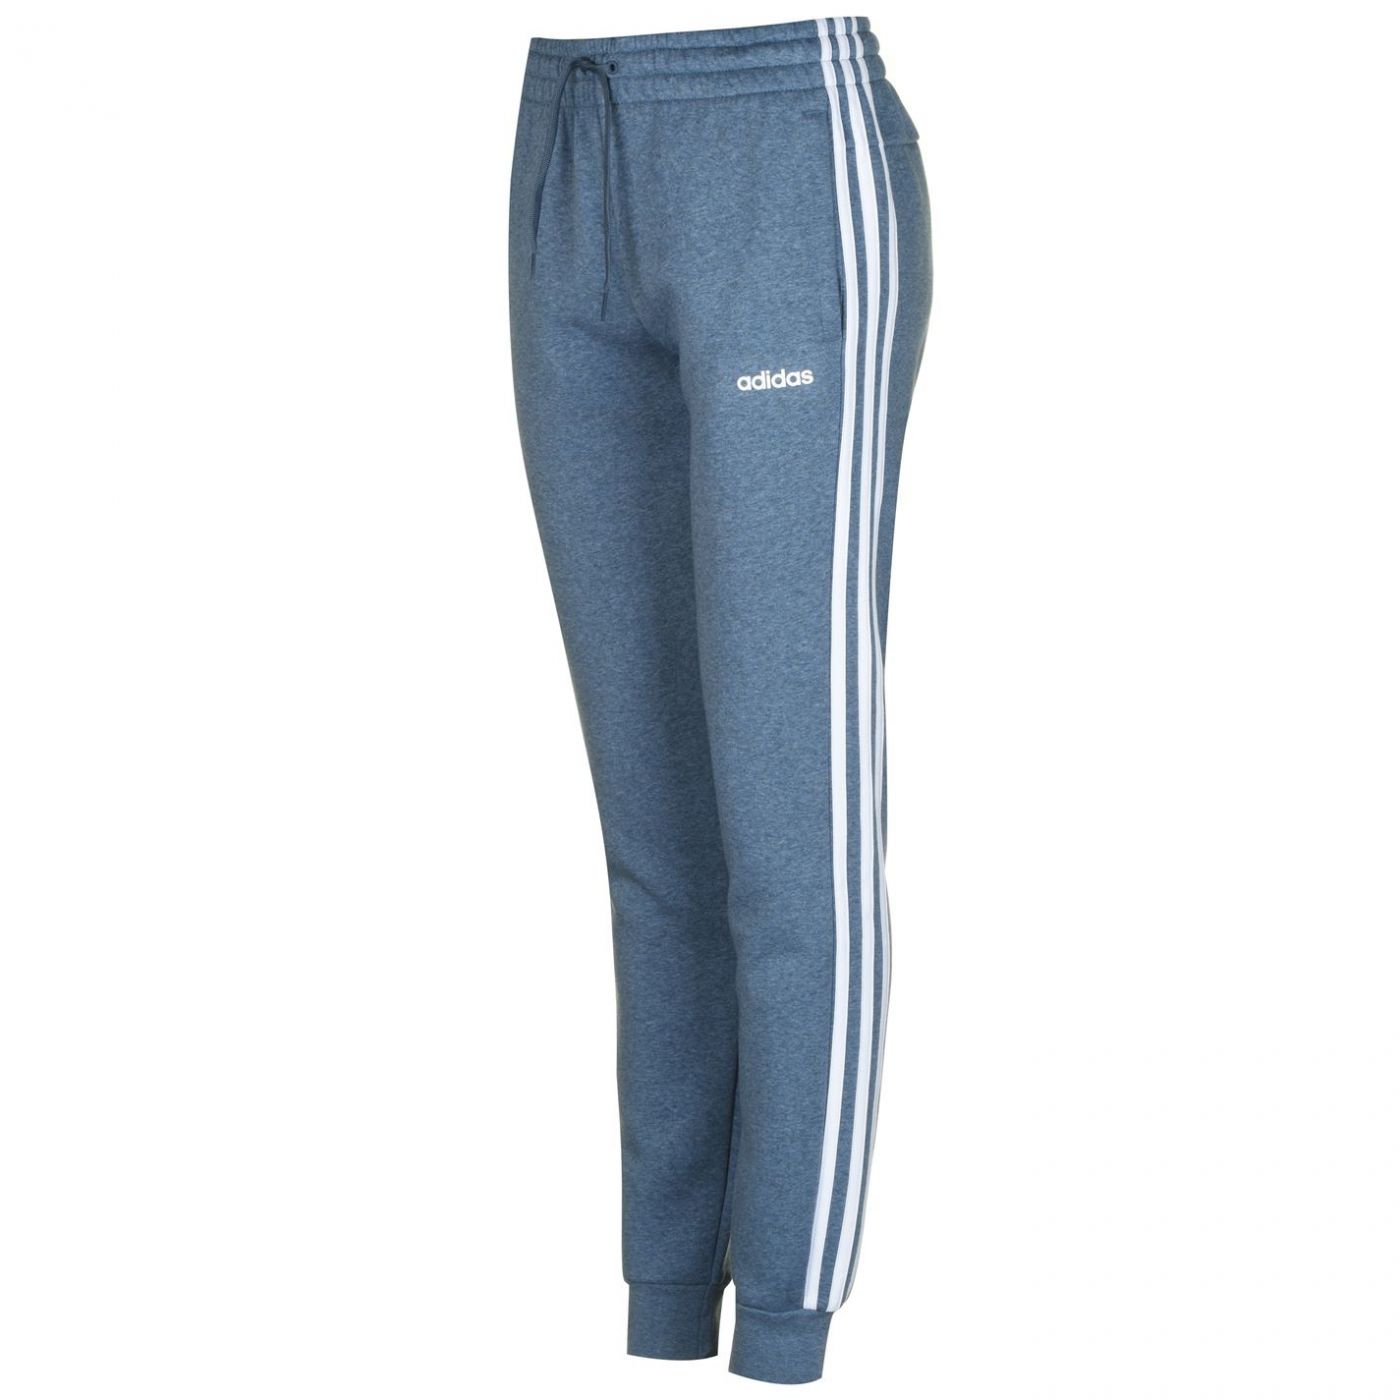 Adidas Essential 3 Stripe Jogging Pants 